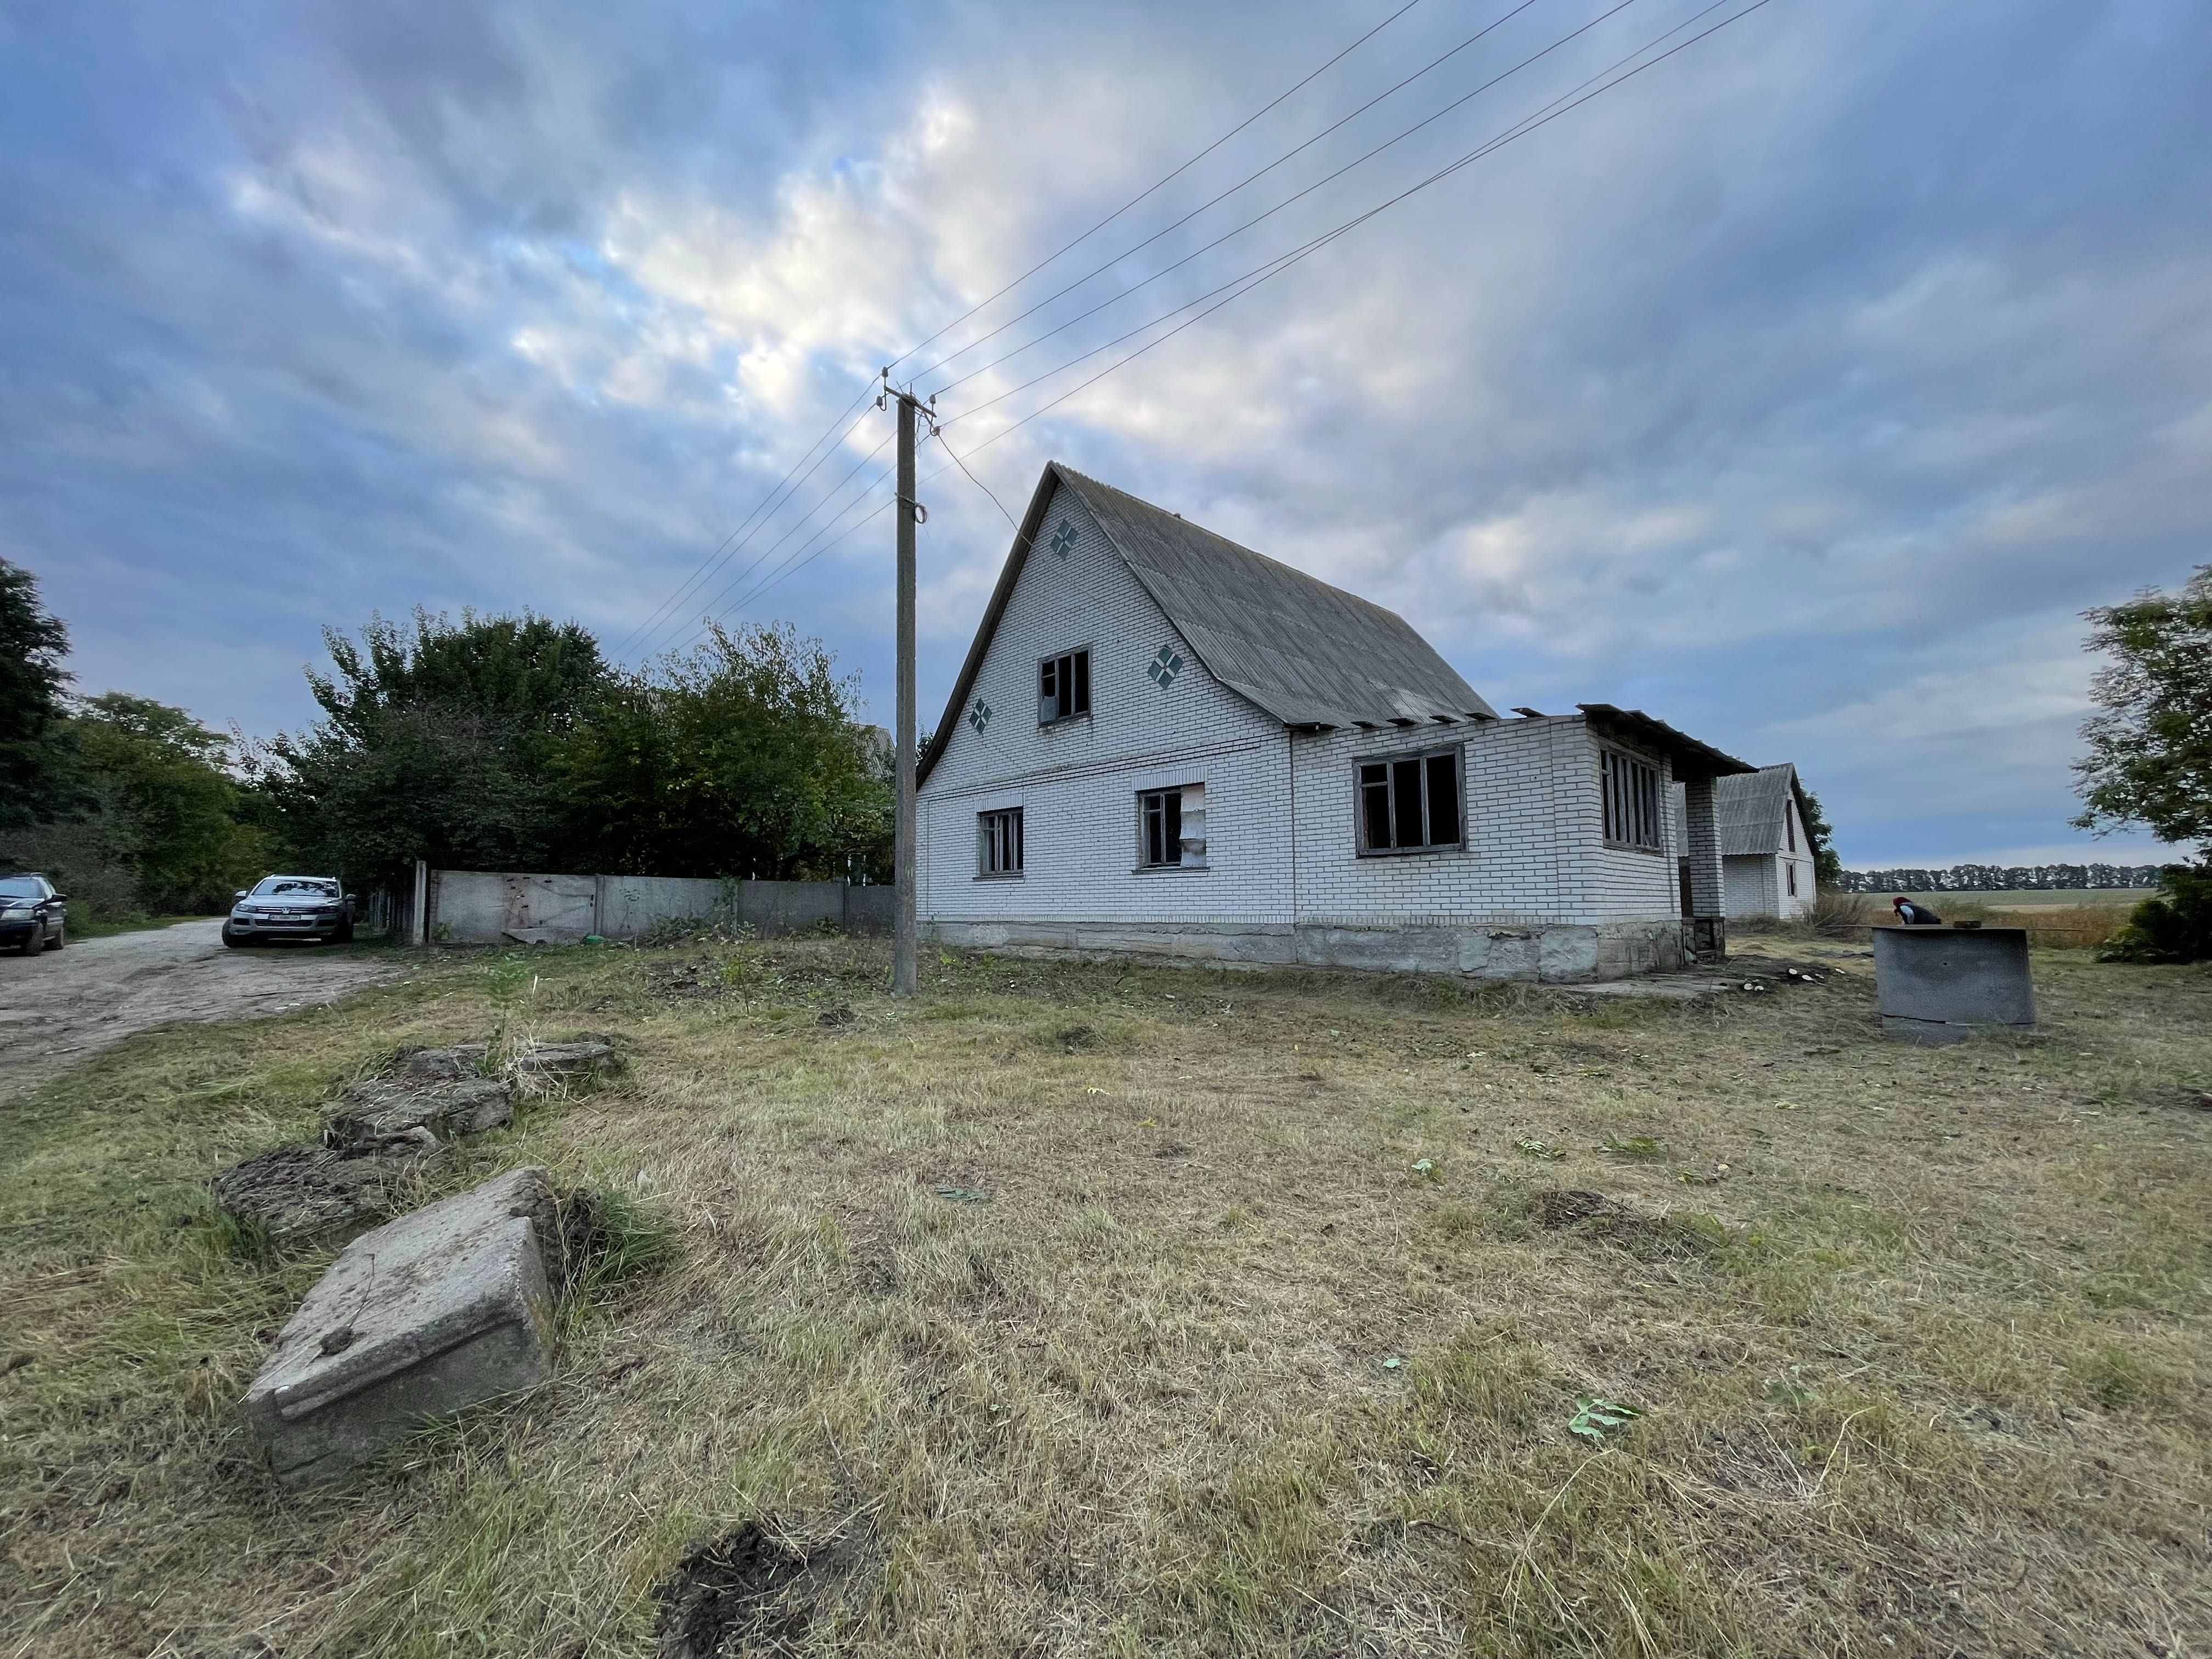 Продам будинок в селі Ківшовата Київська область